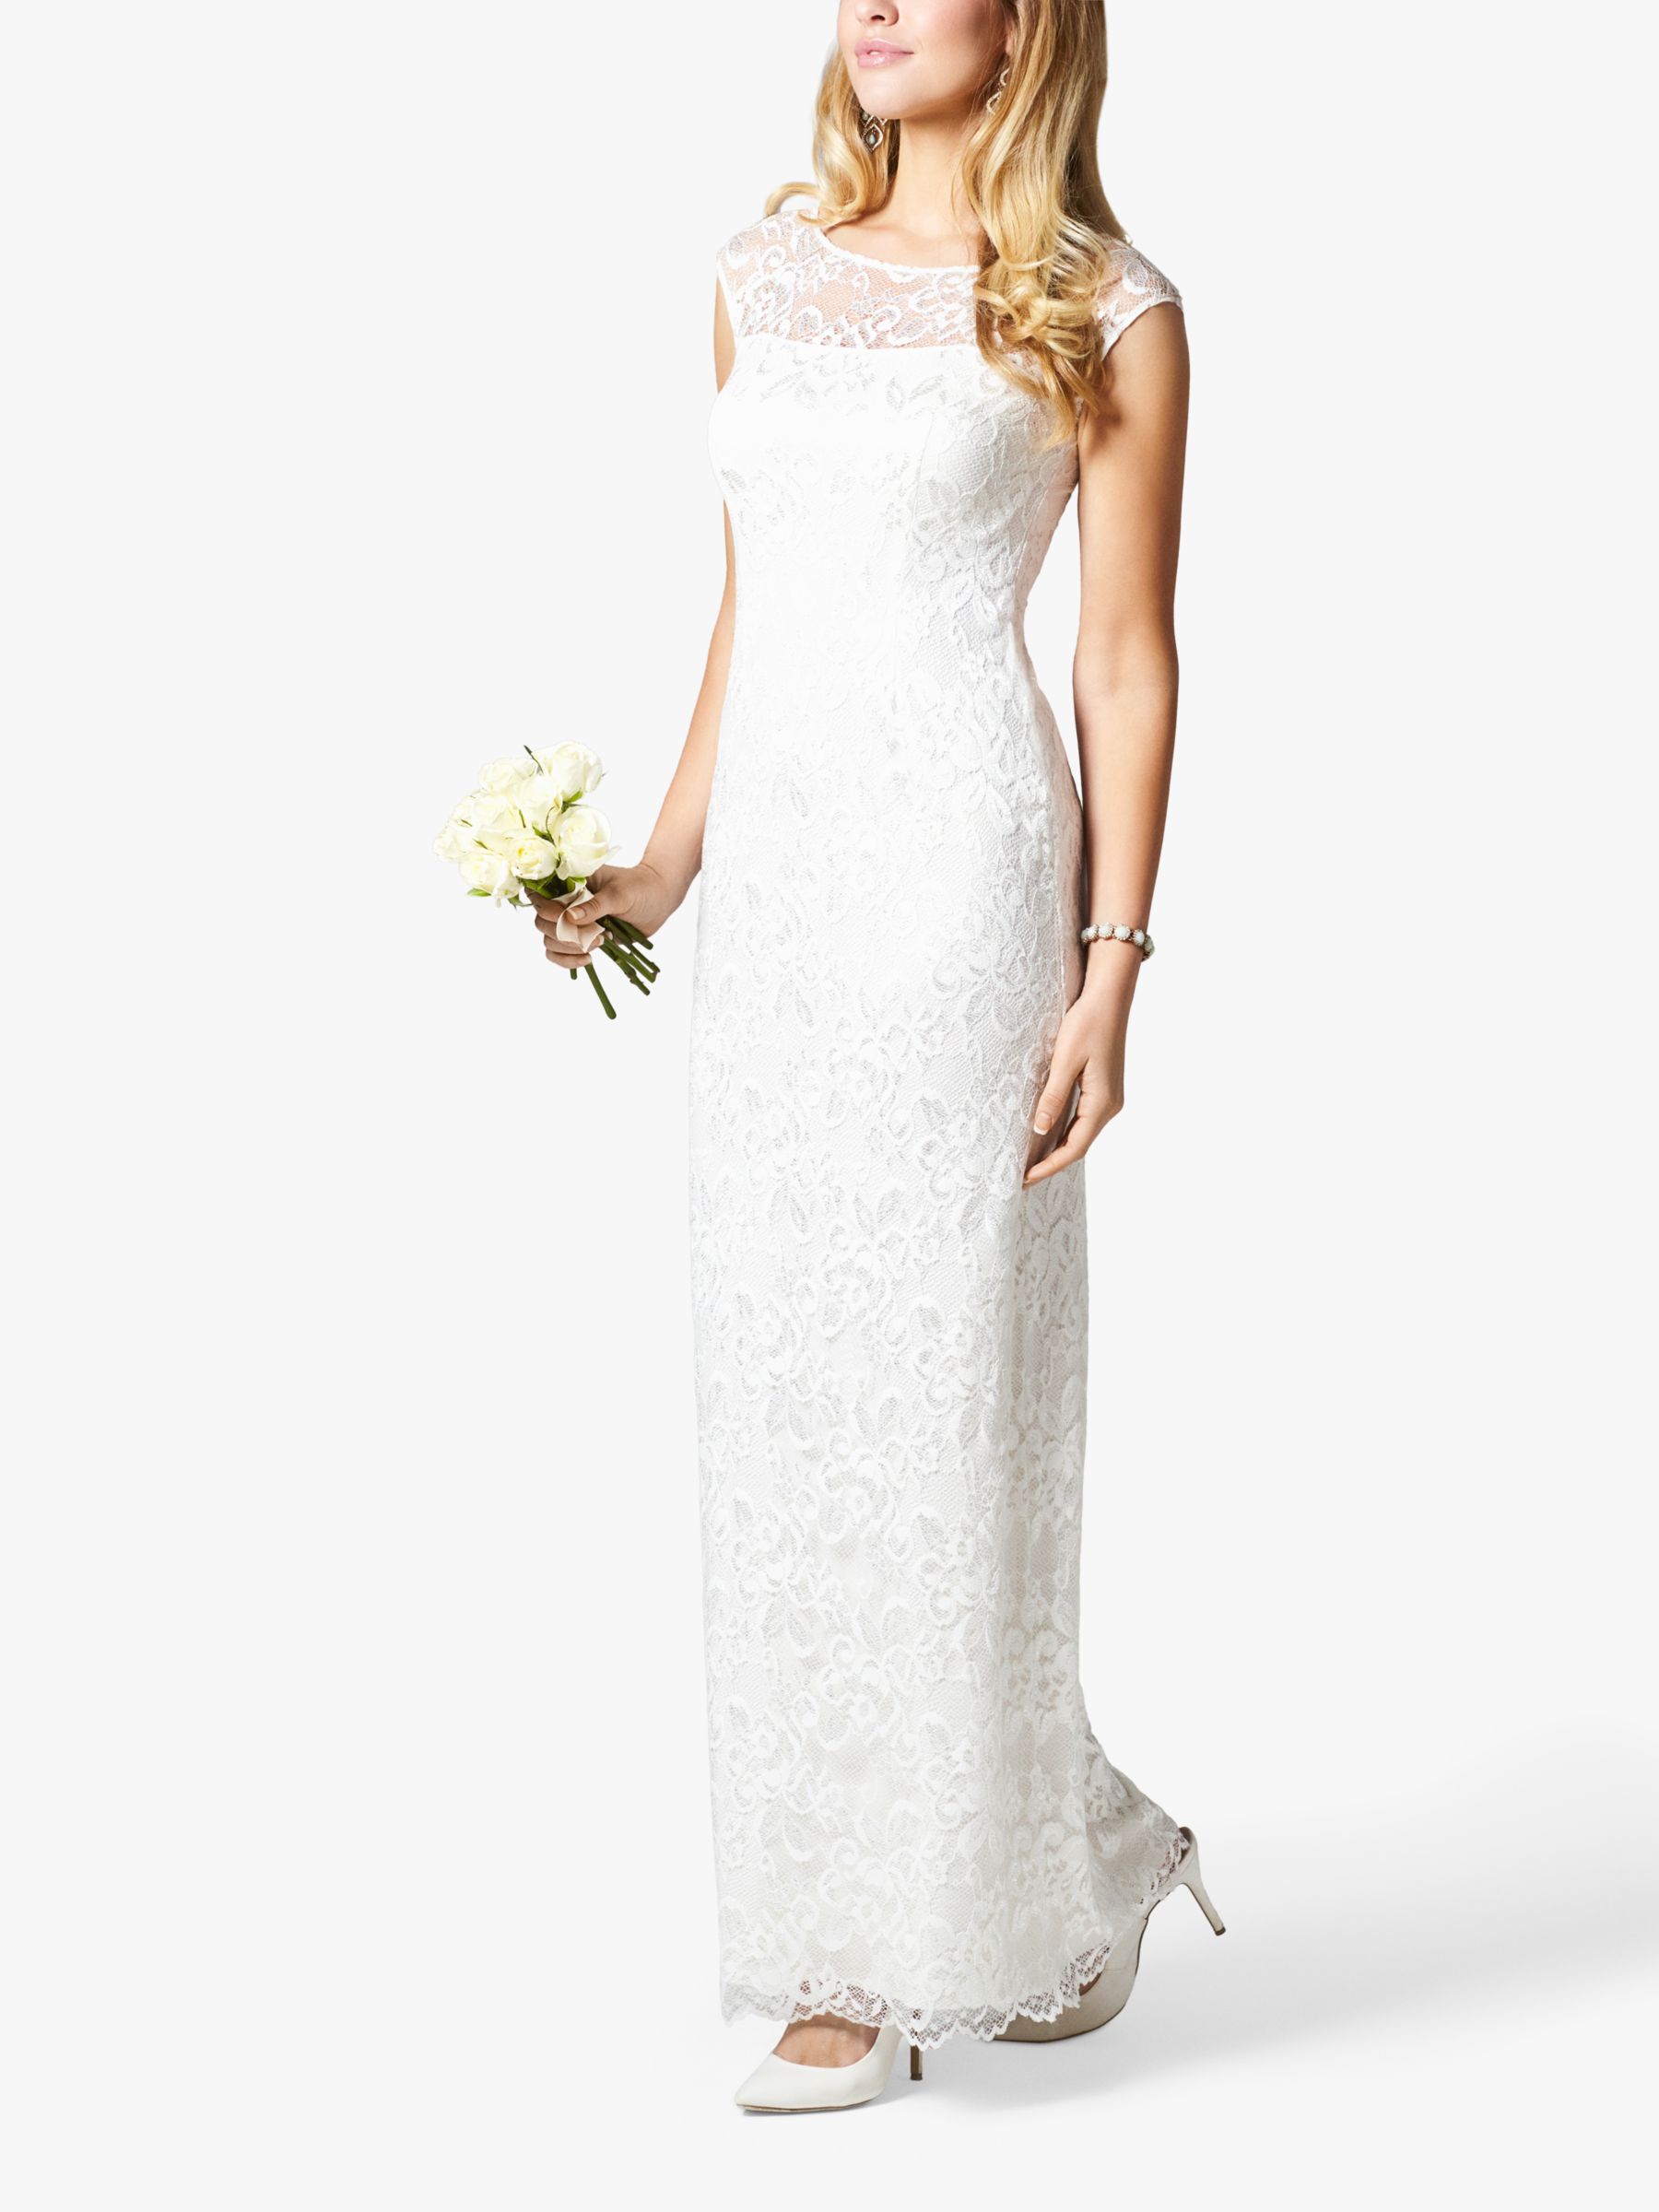 Alie Street Amber Floral Lace Maxi Wedding Dress, Ivory, 6-8